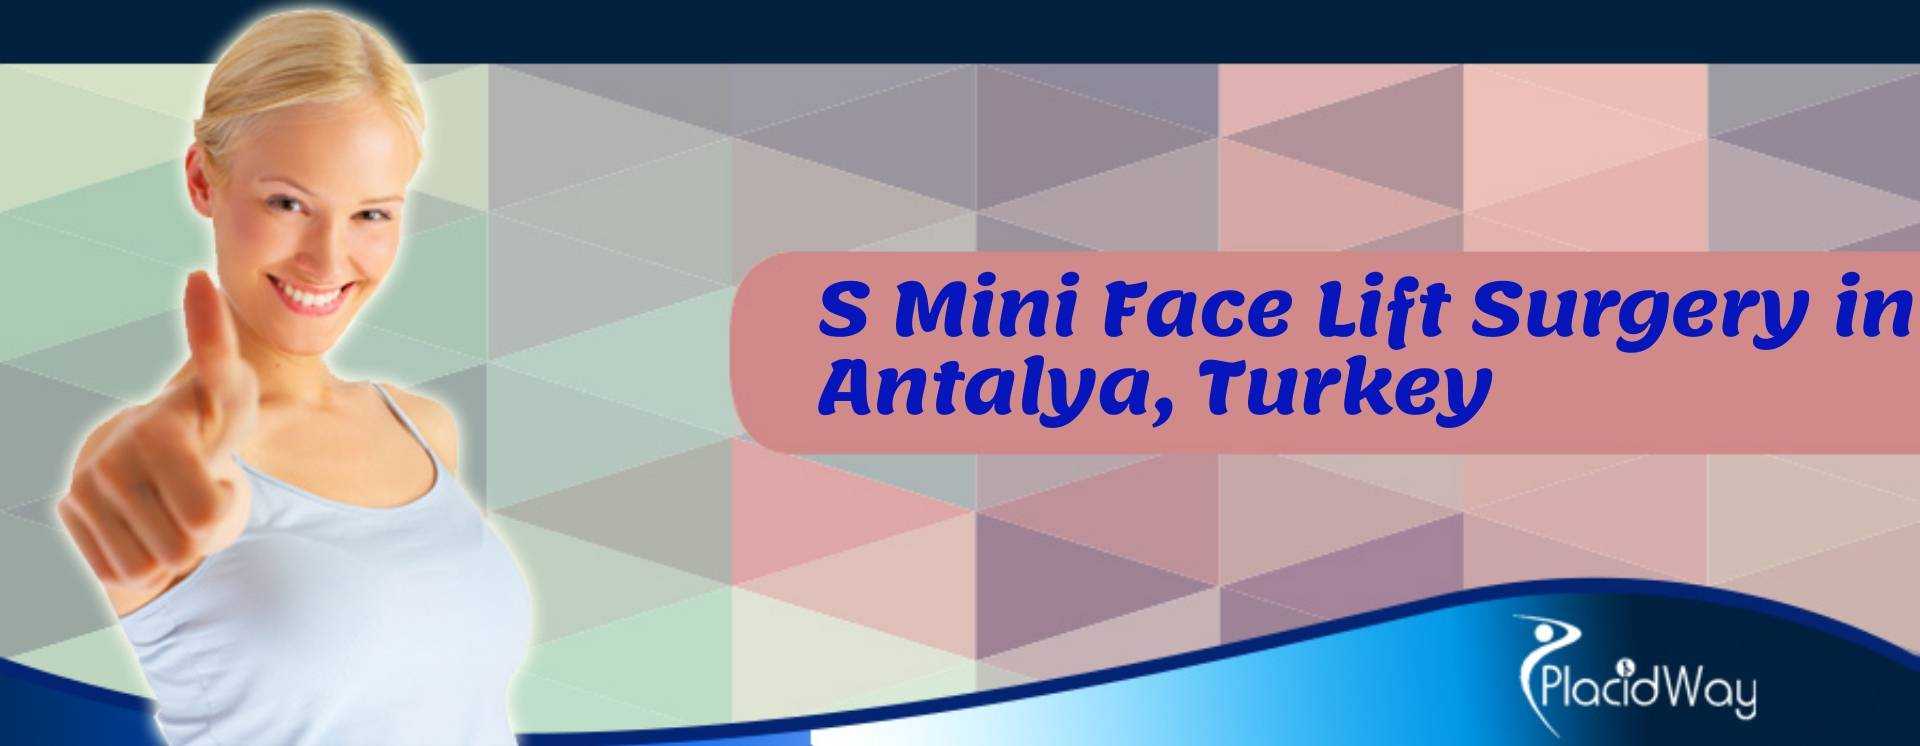 S Mini Face Lift in Antalya, Turkey